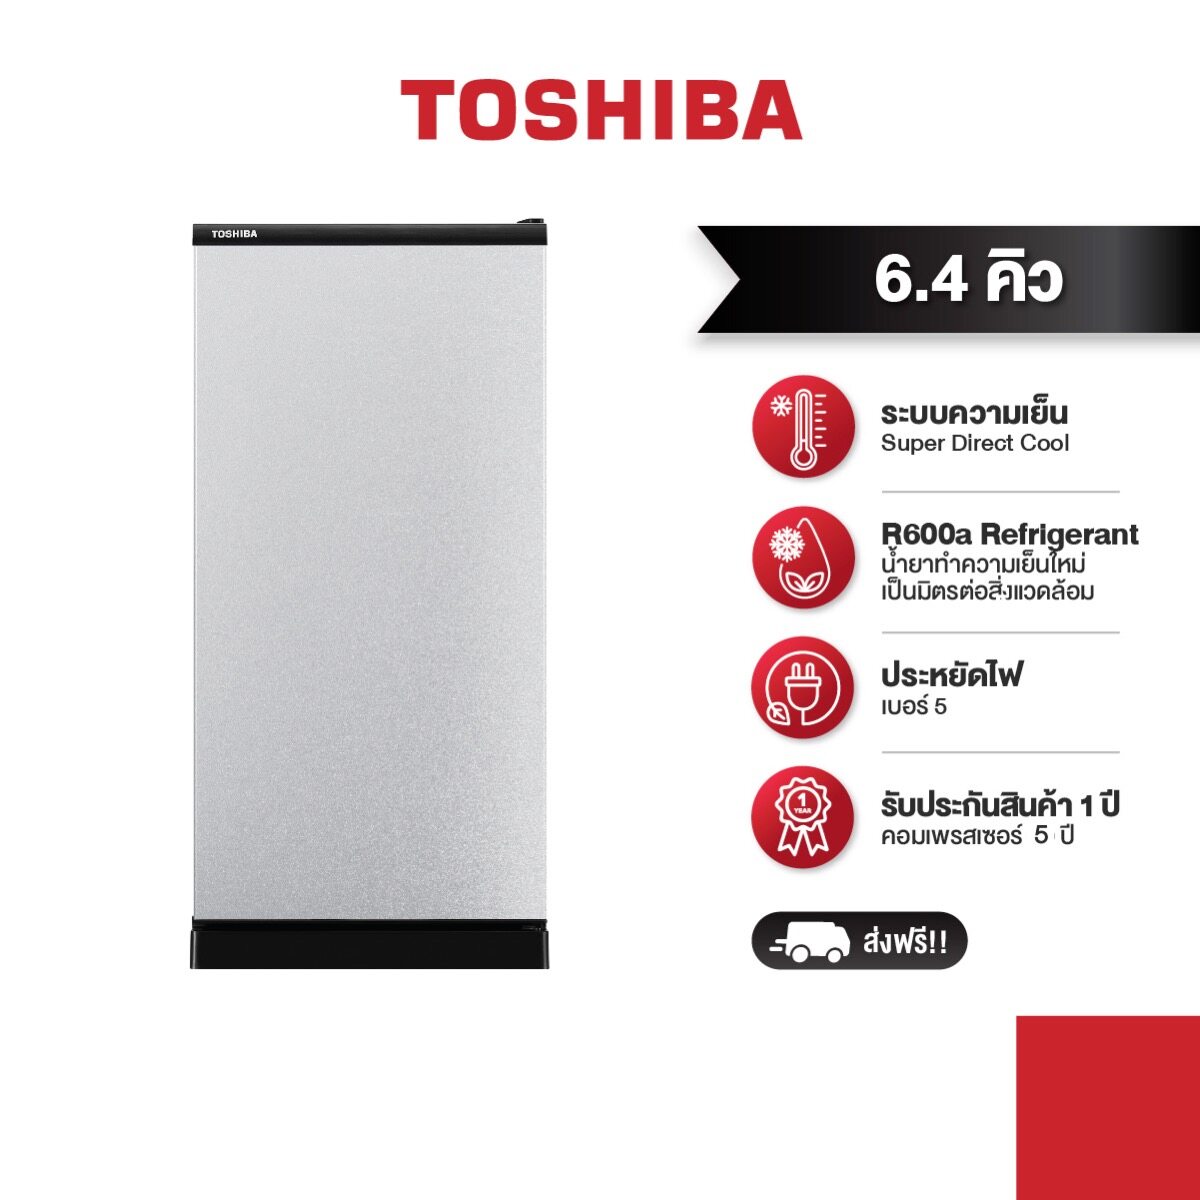 TOSHIBA ตู้เย็น 1 ประตู ความจุ 6.4 คิว รุ่น GR-C189